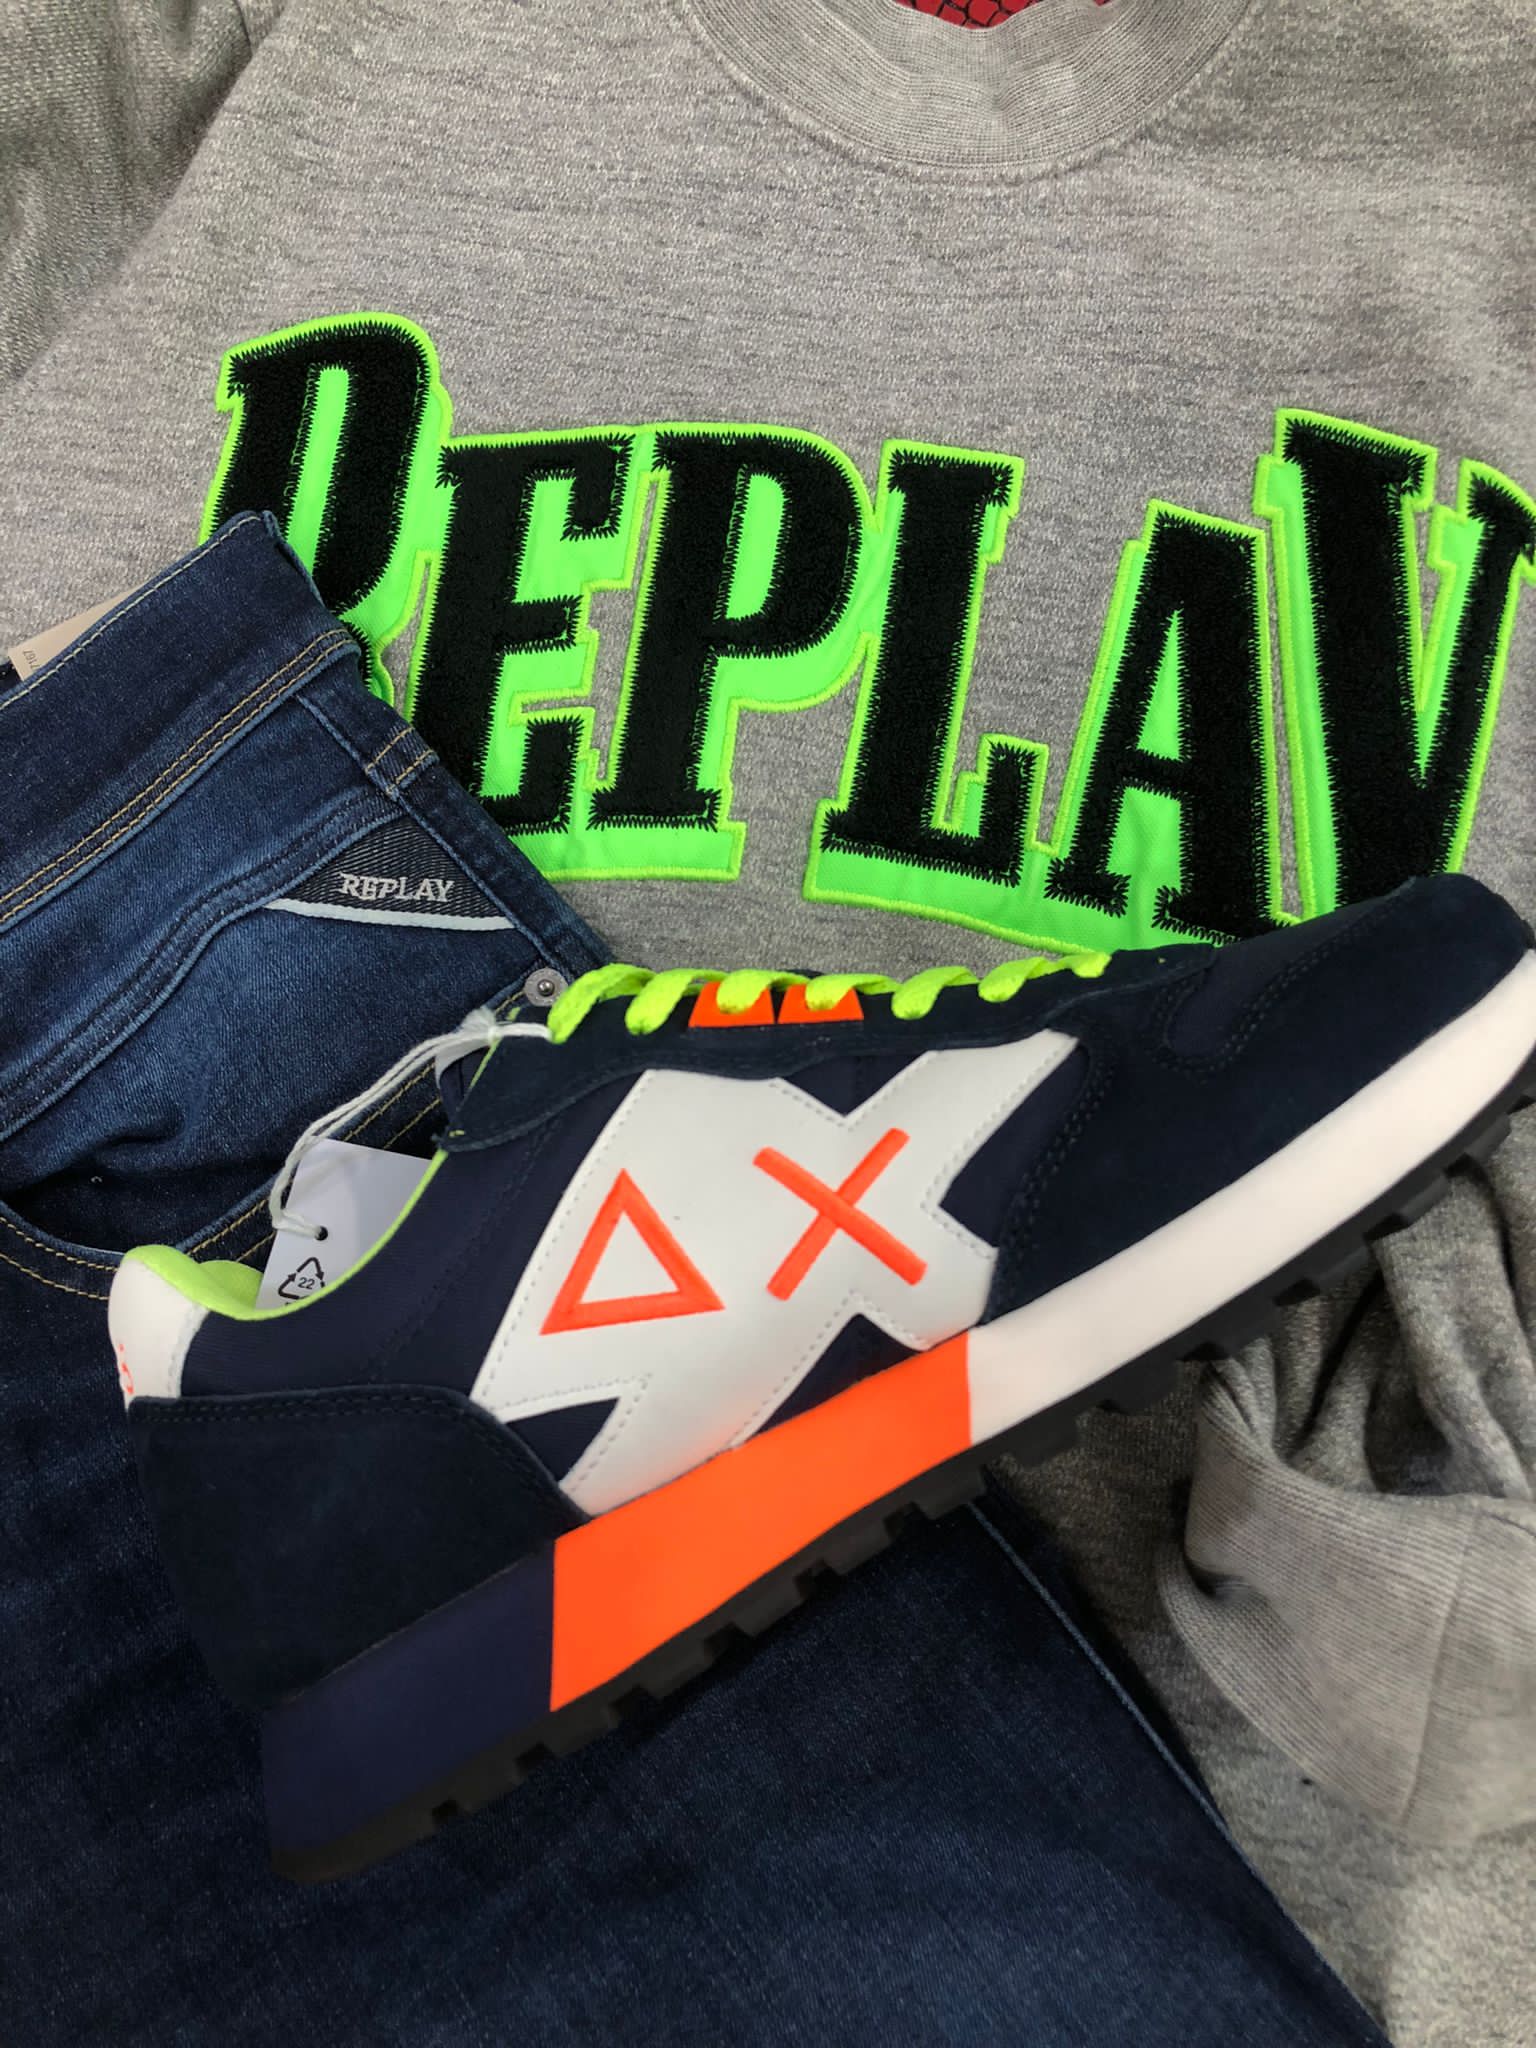 Outfit camiseta Replay, hyperflex Replay y sneakers Sun68